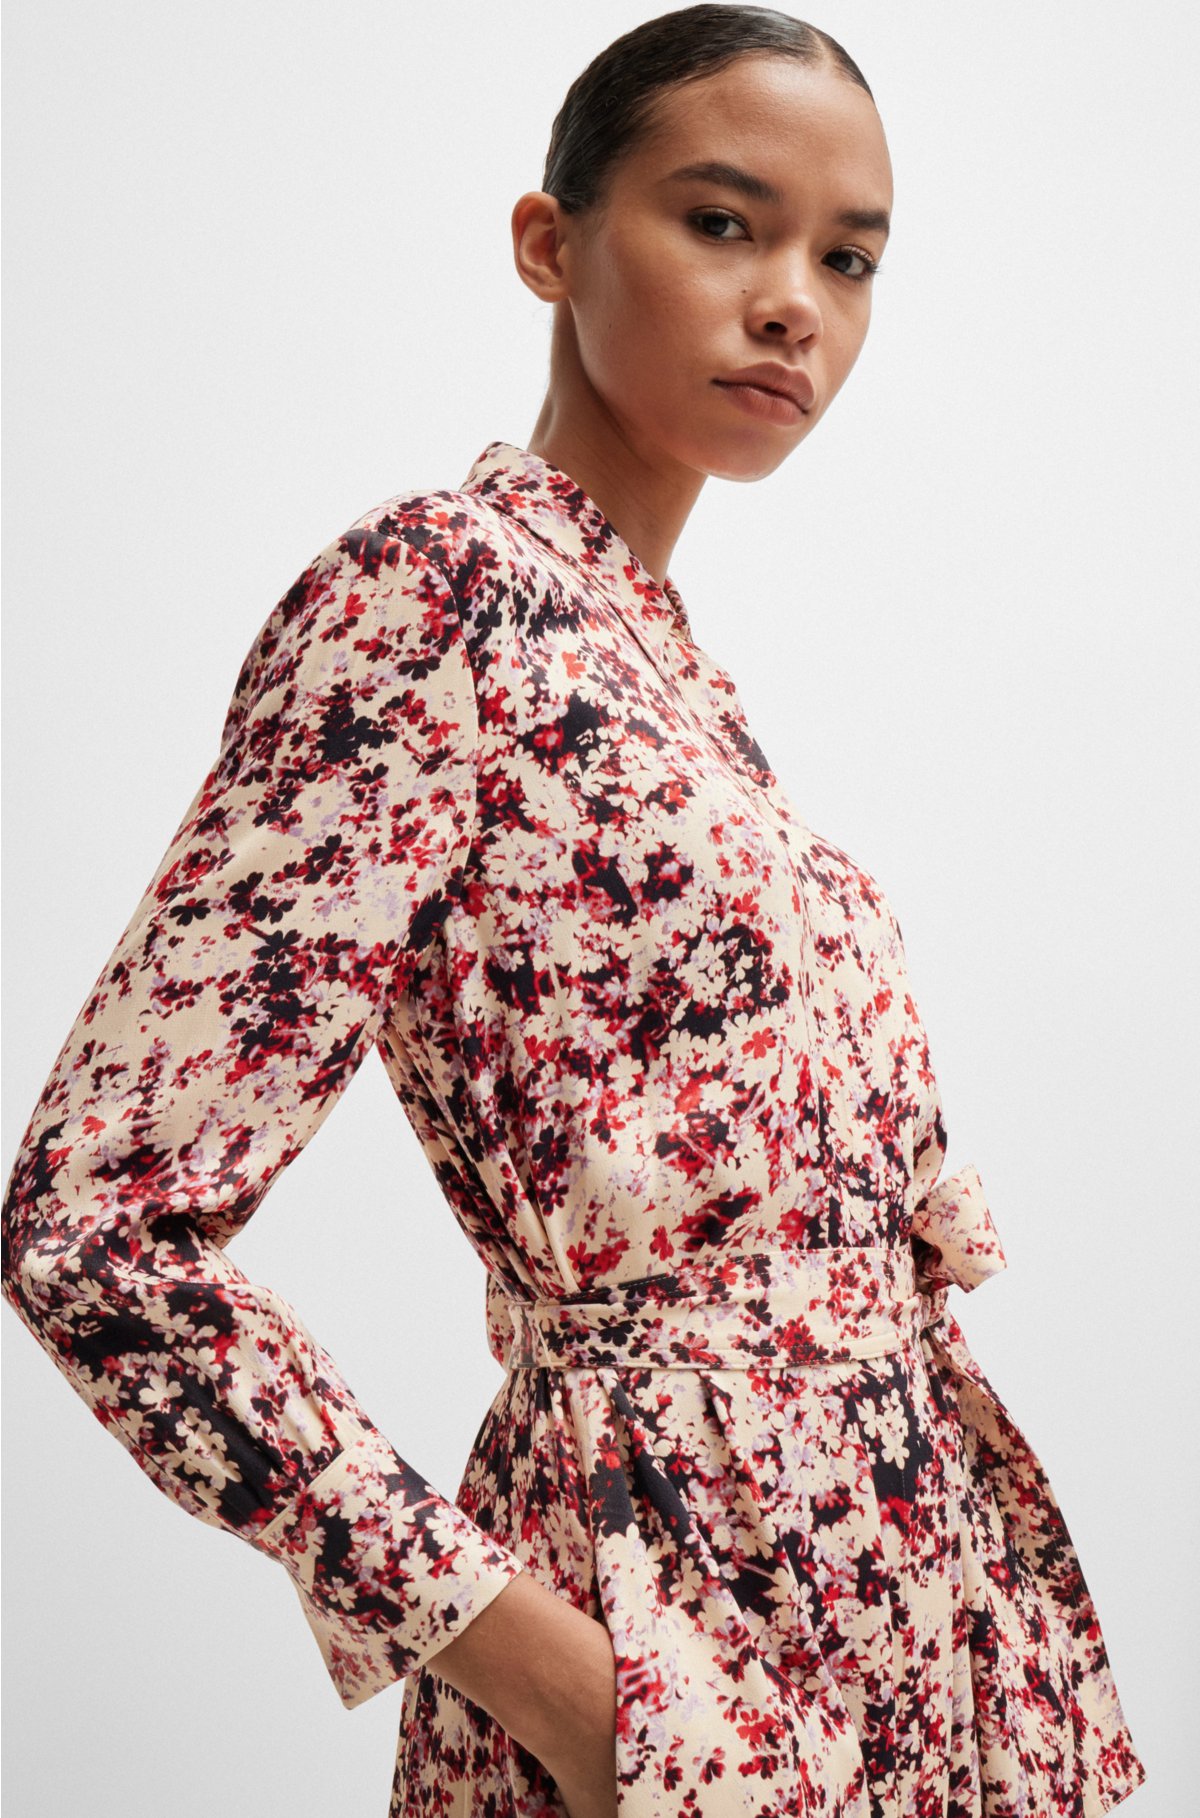 Long-sleeved shirt dress in floral-print satin, Patterned